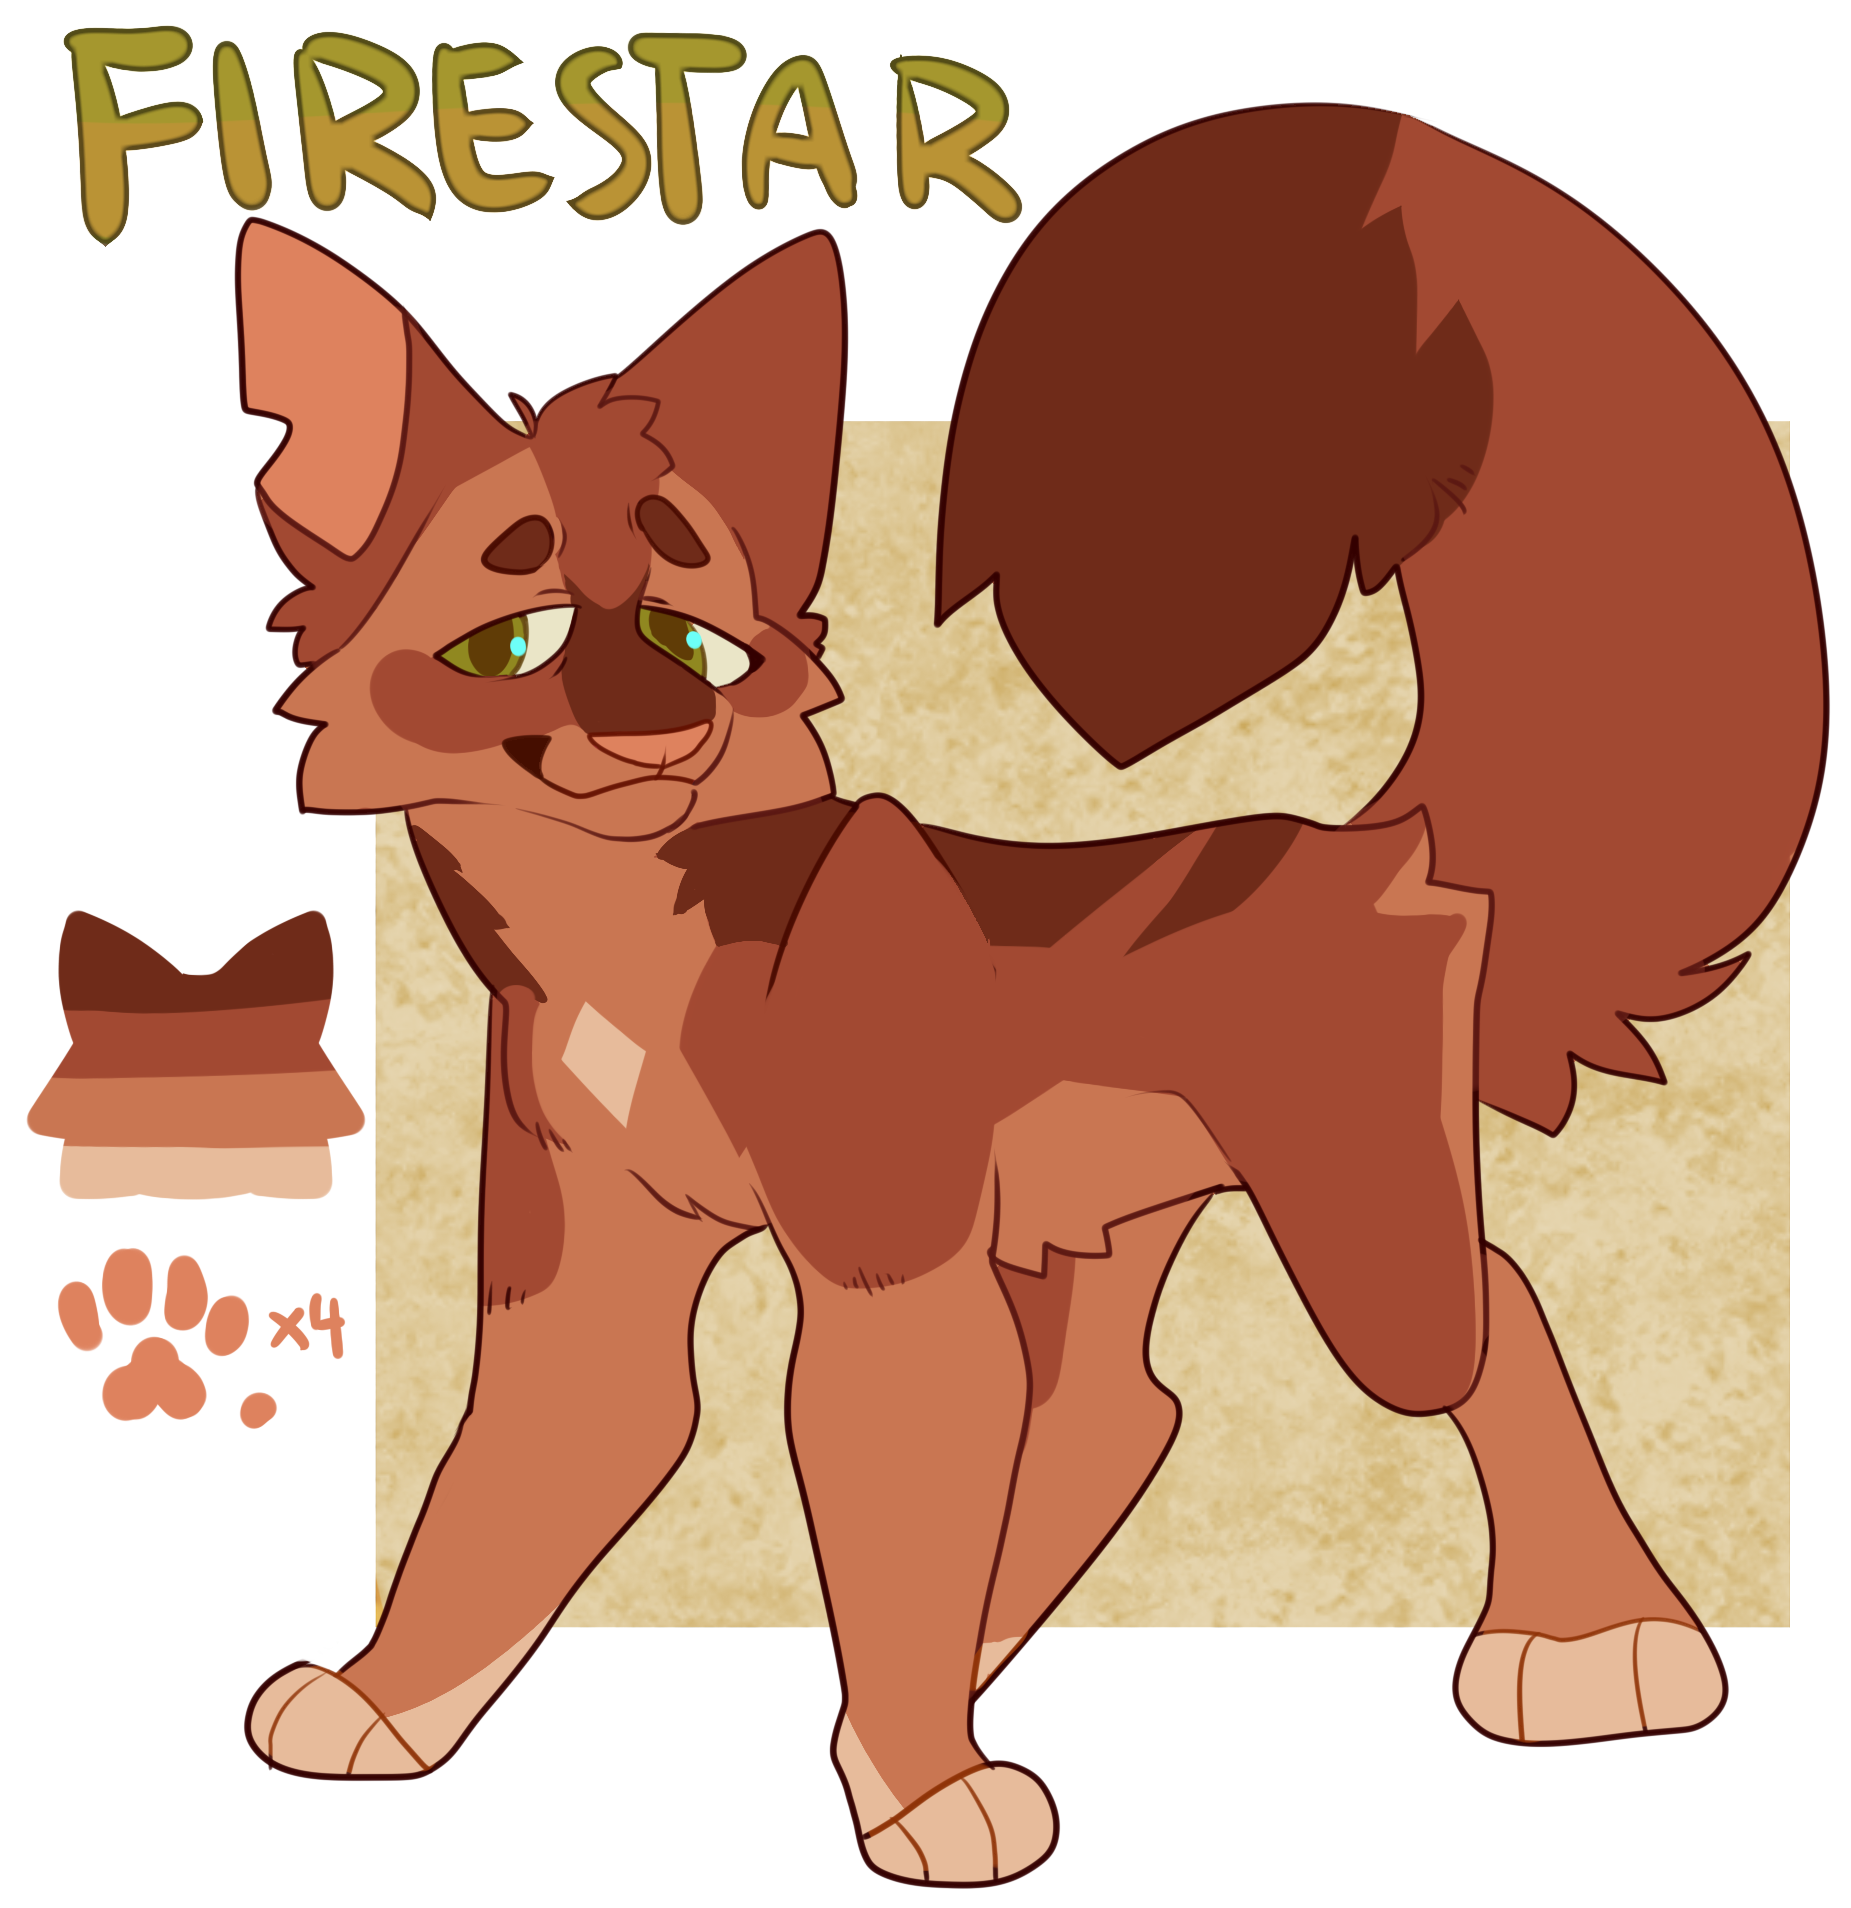 Firestar design - Warriors Cats by AngelDalet on DeviantArt